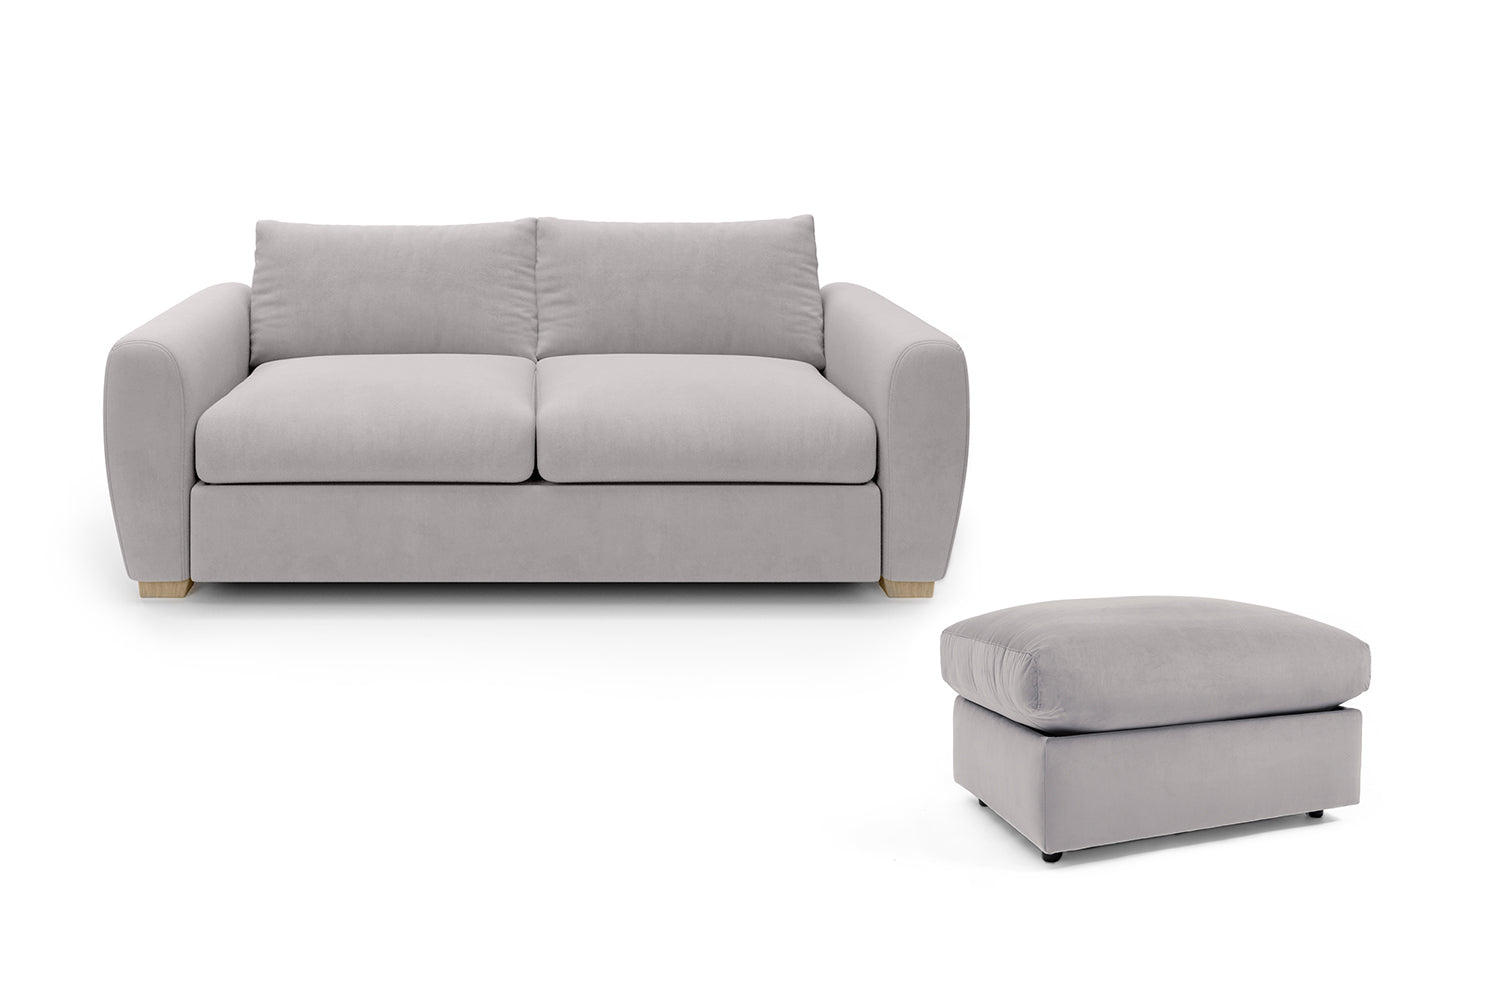 The Cloud Sundae - 3 Seater Sofa and Footstool Set - Warm Grey